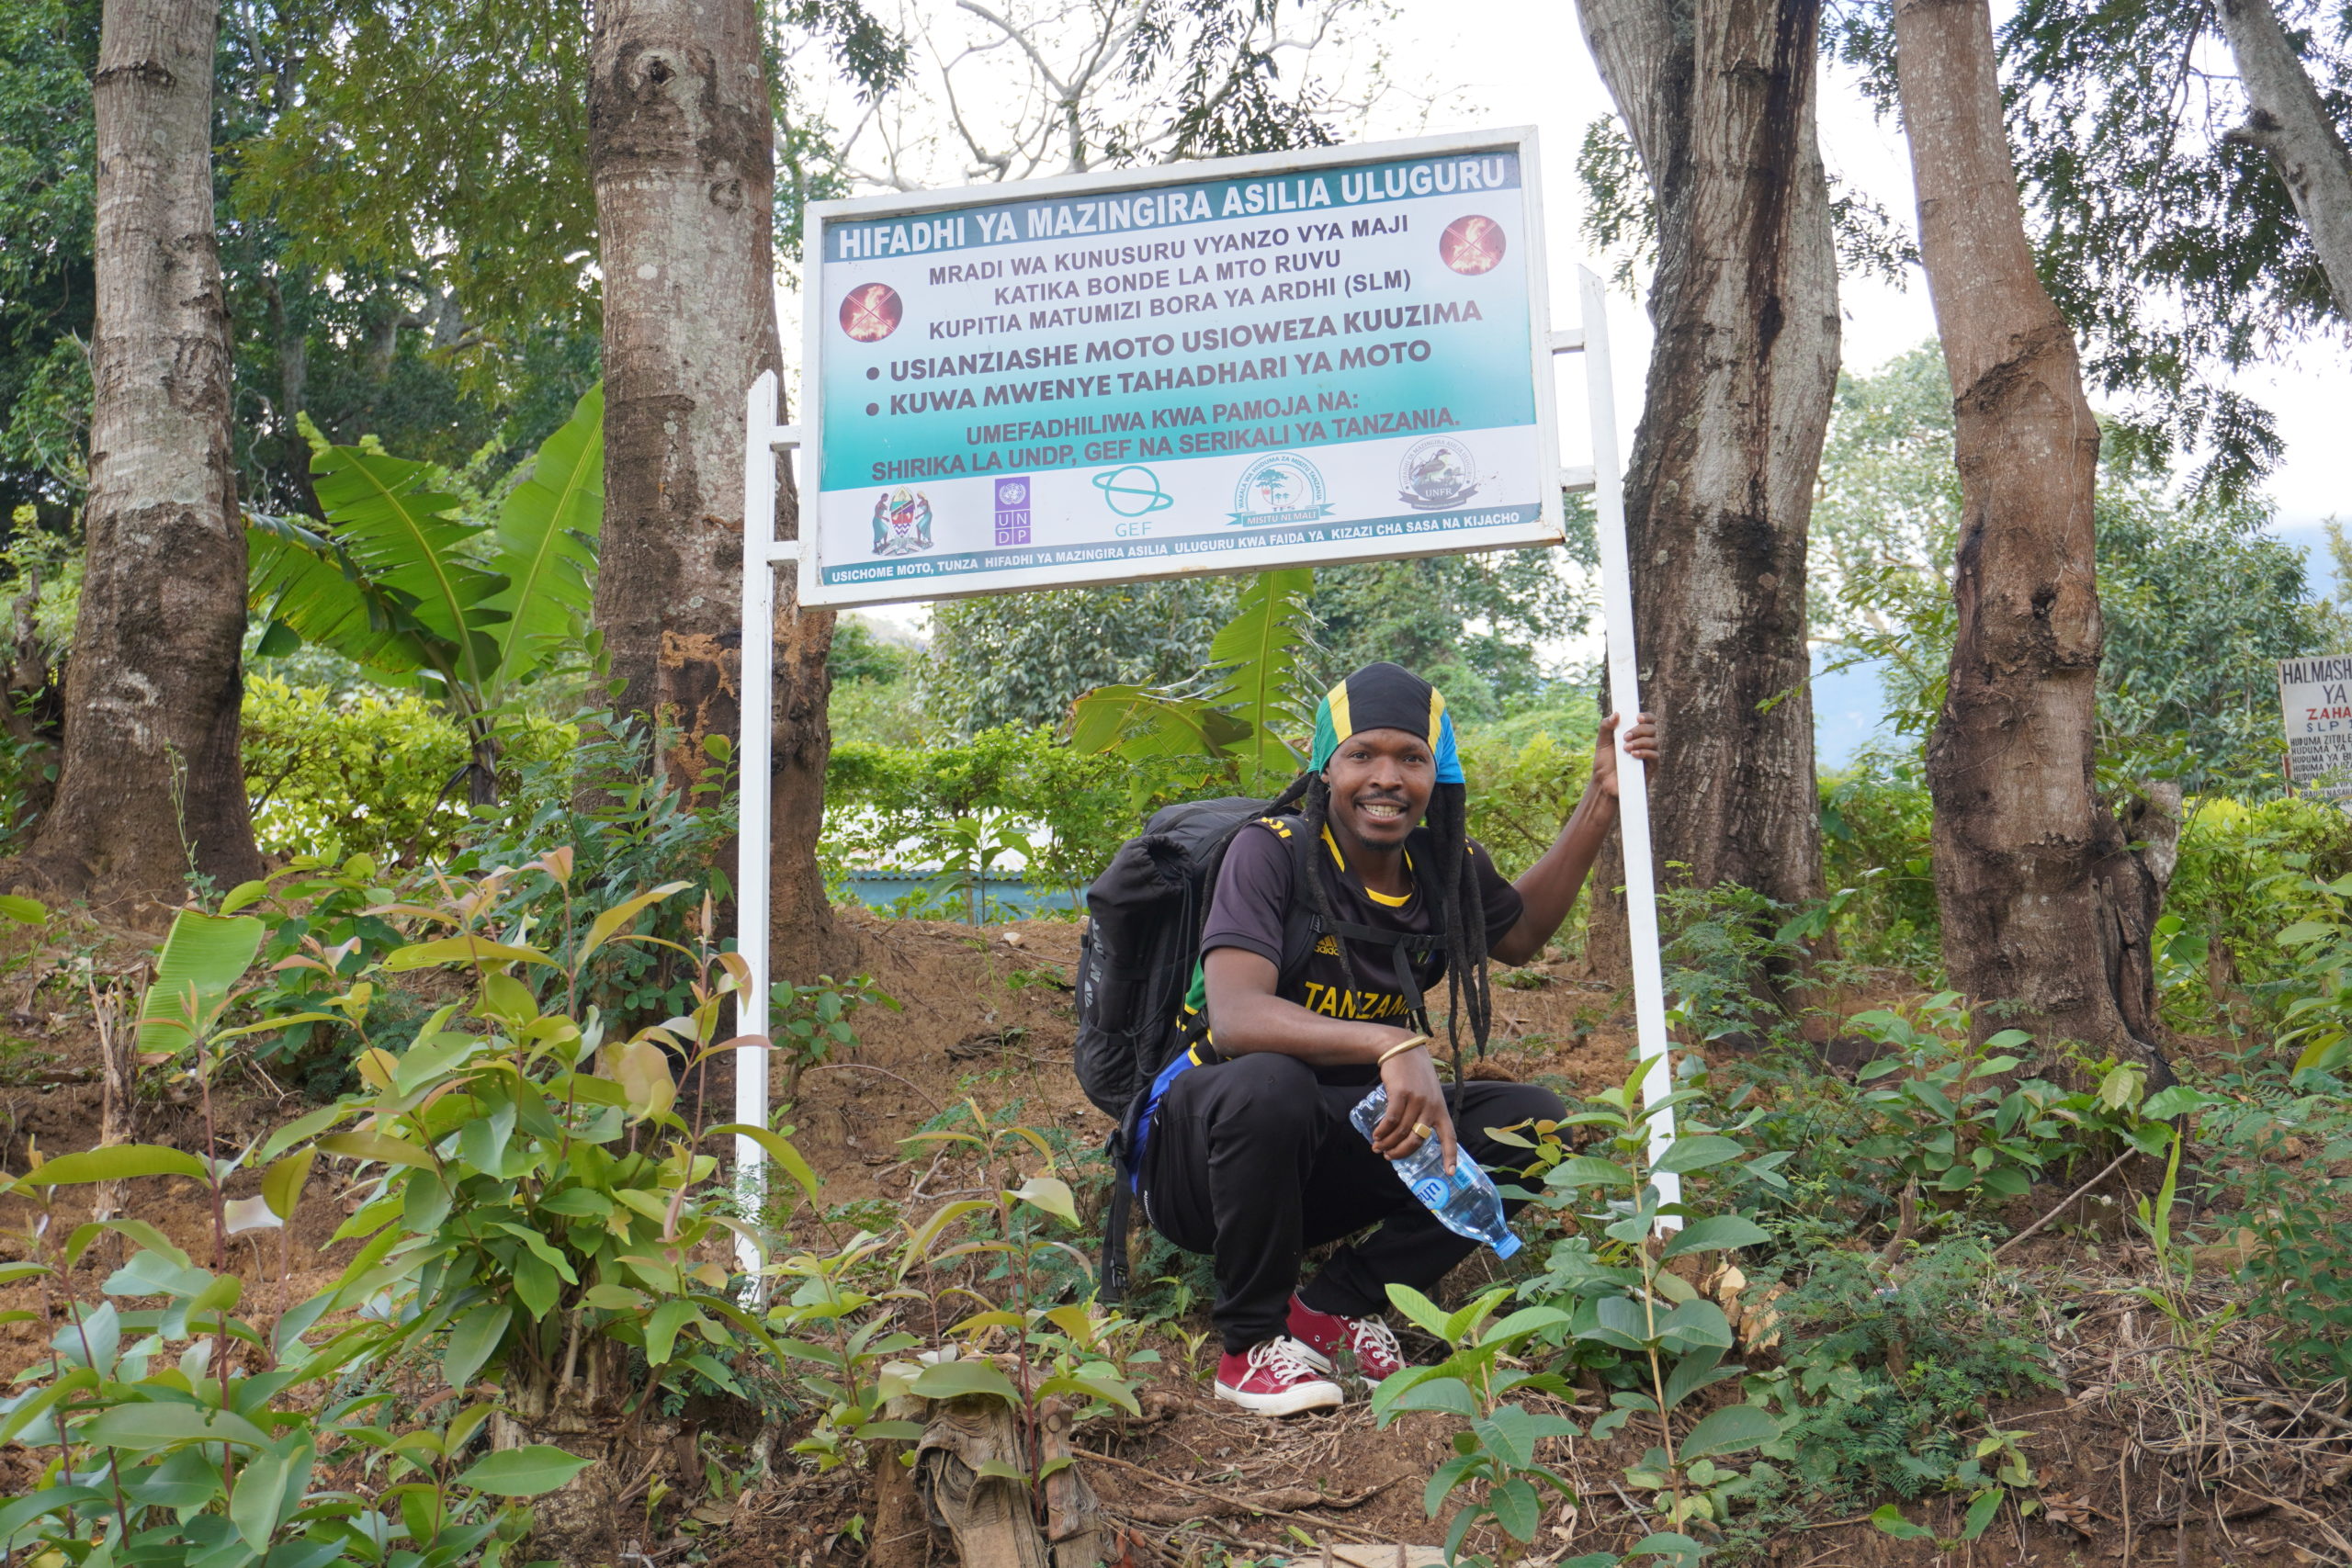 Bakari, my tour guide with the Uluguru mountains sign